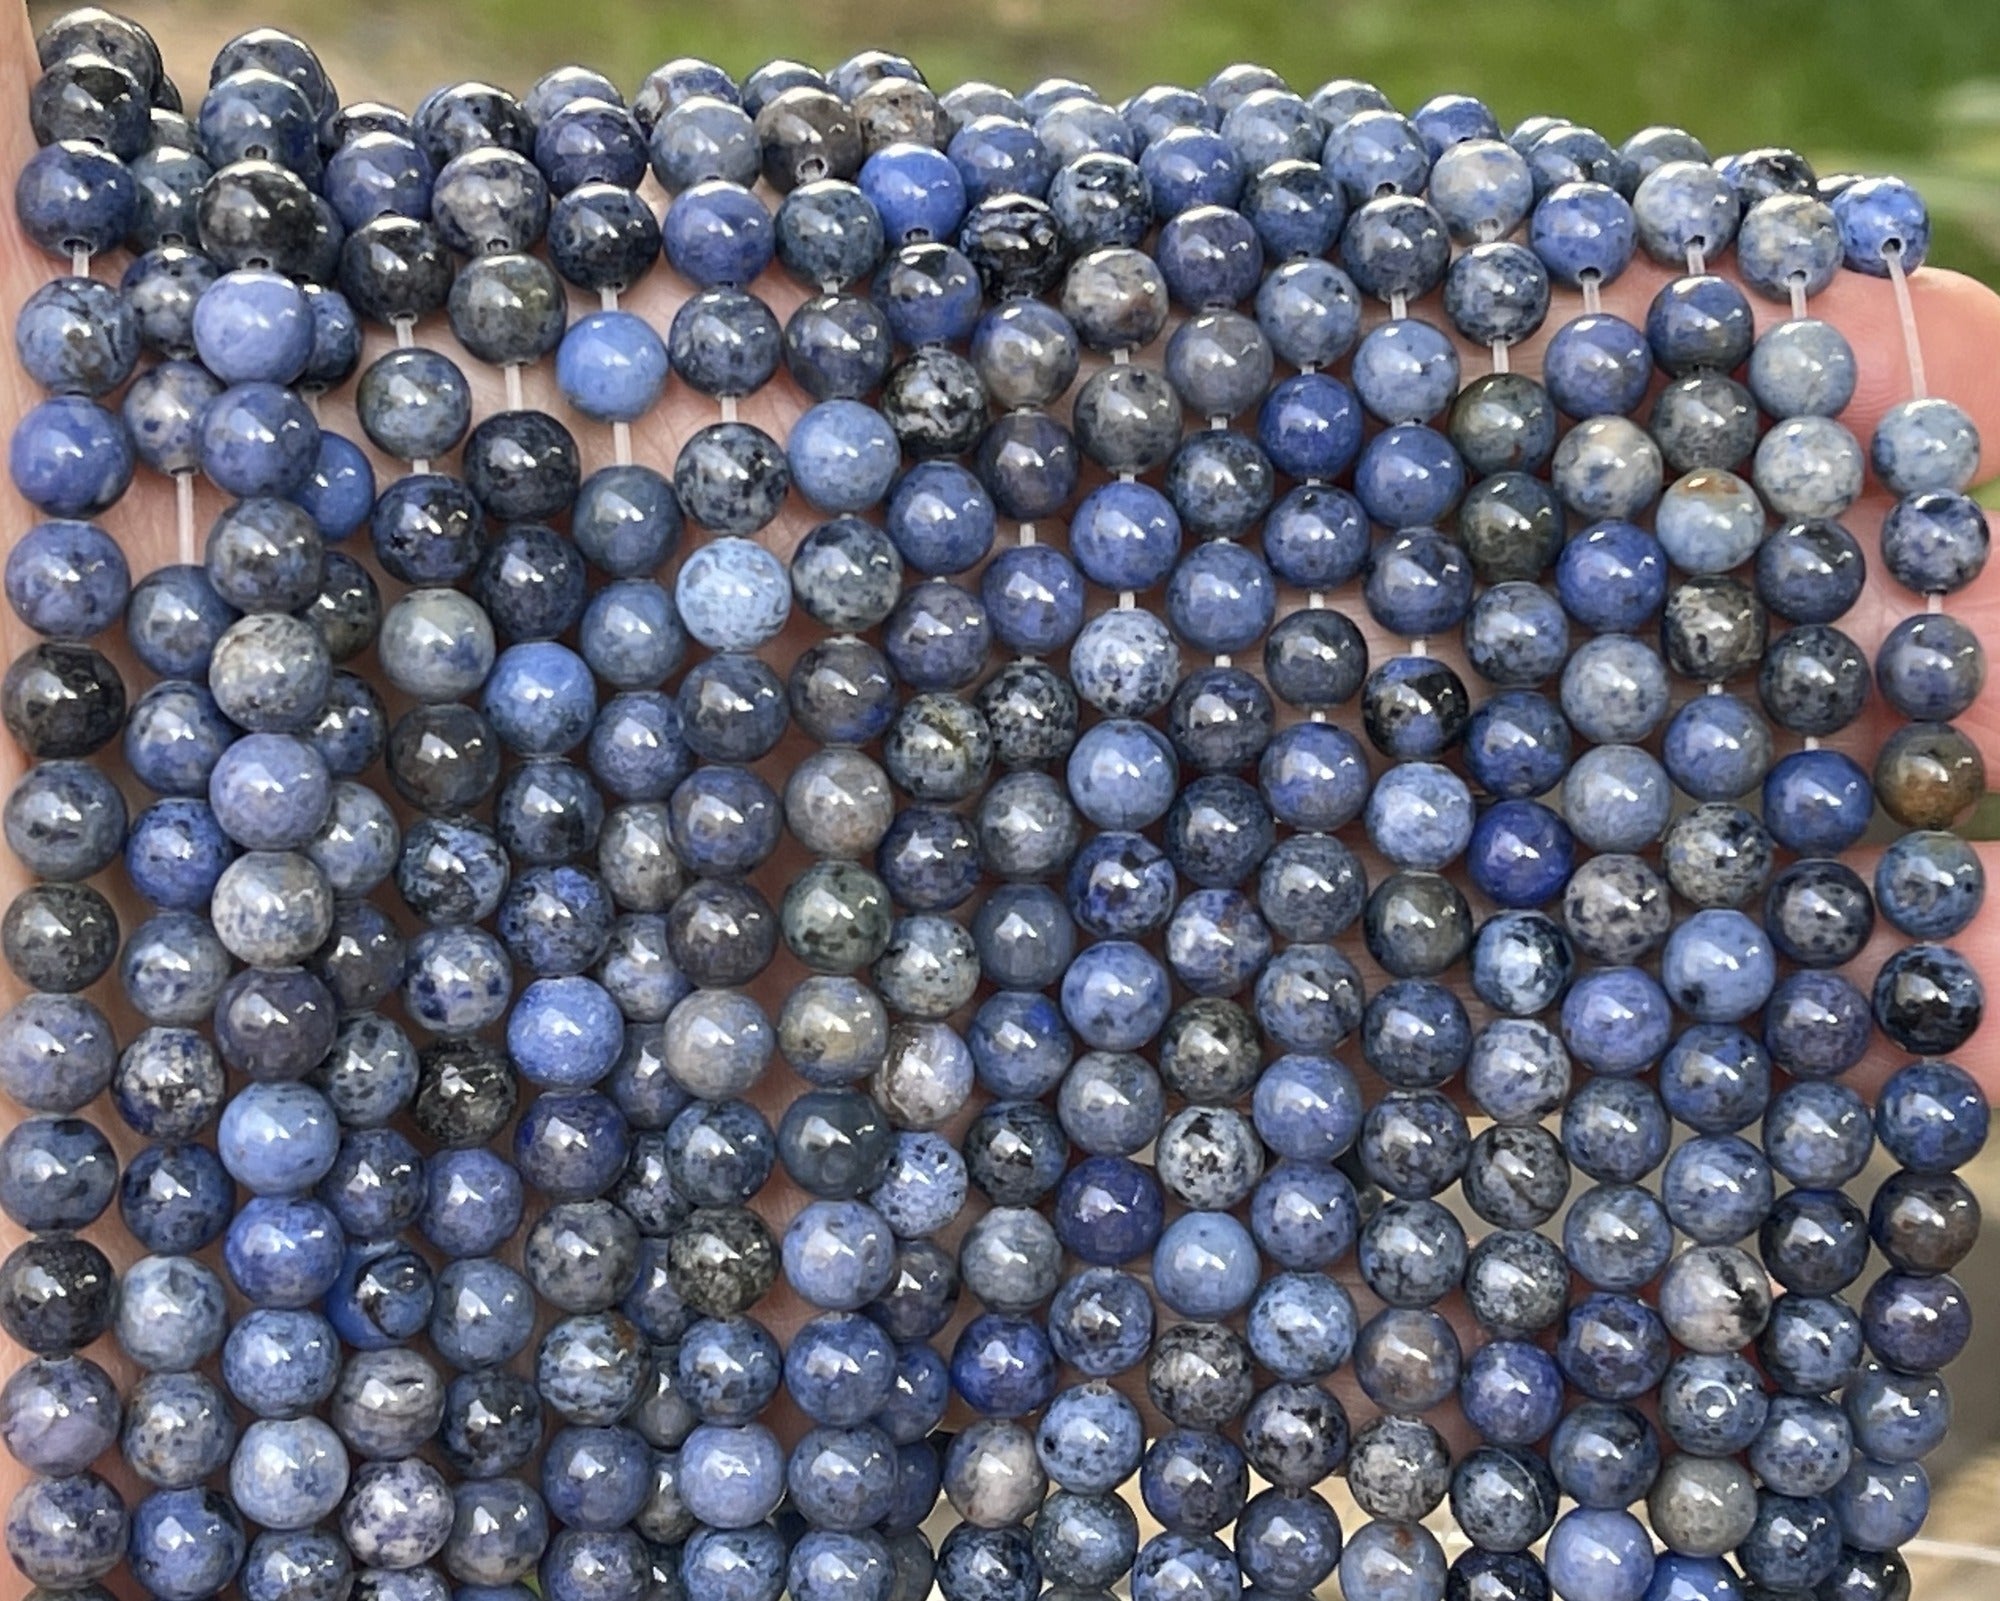 Dumortierite 6mm round natural gemstone beads 15.5" strand - Oz Beads 